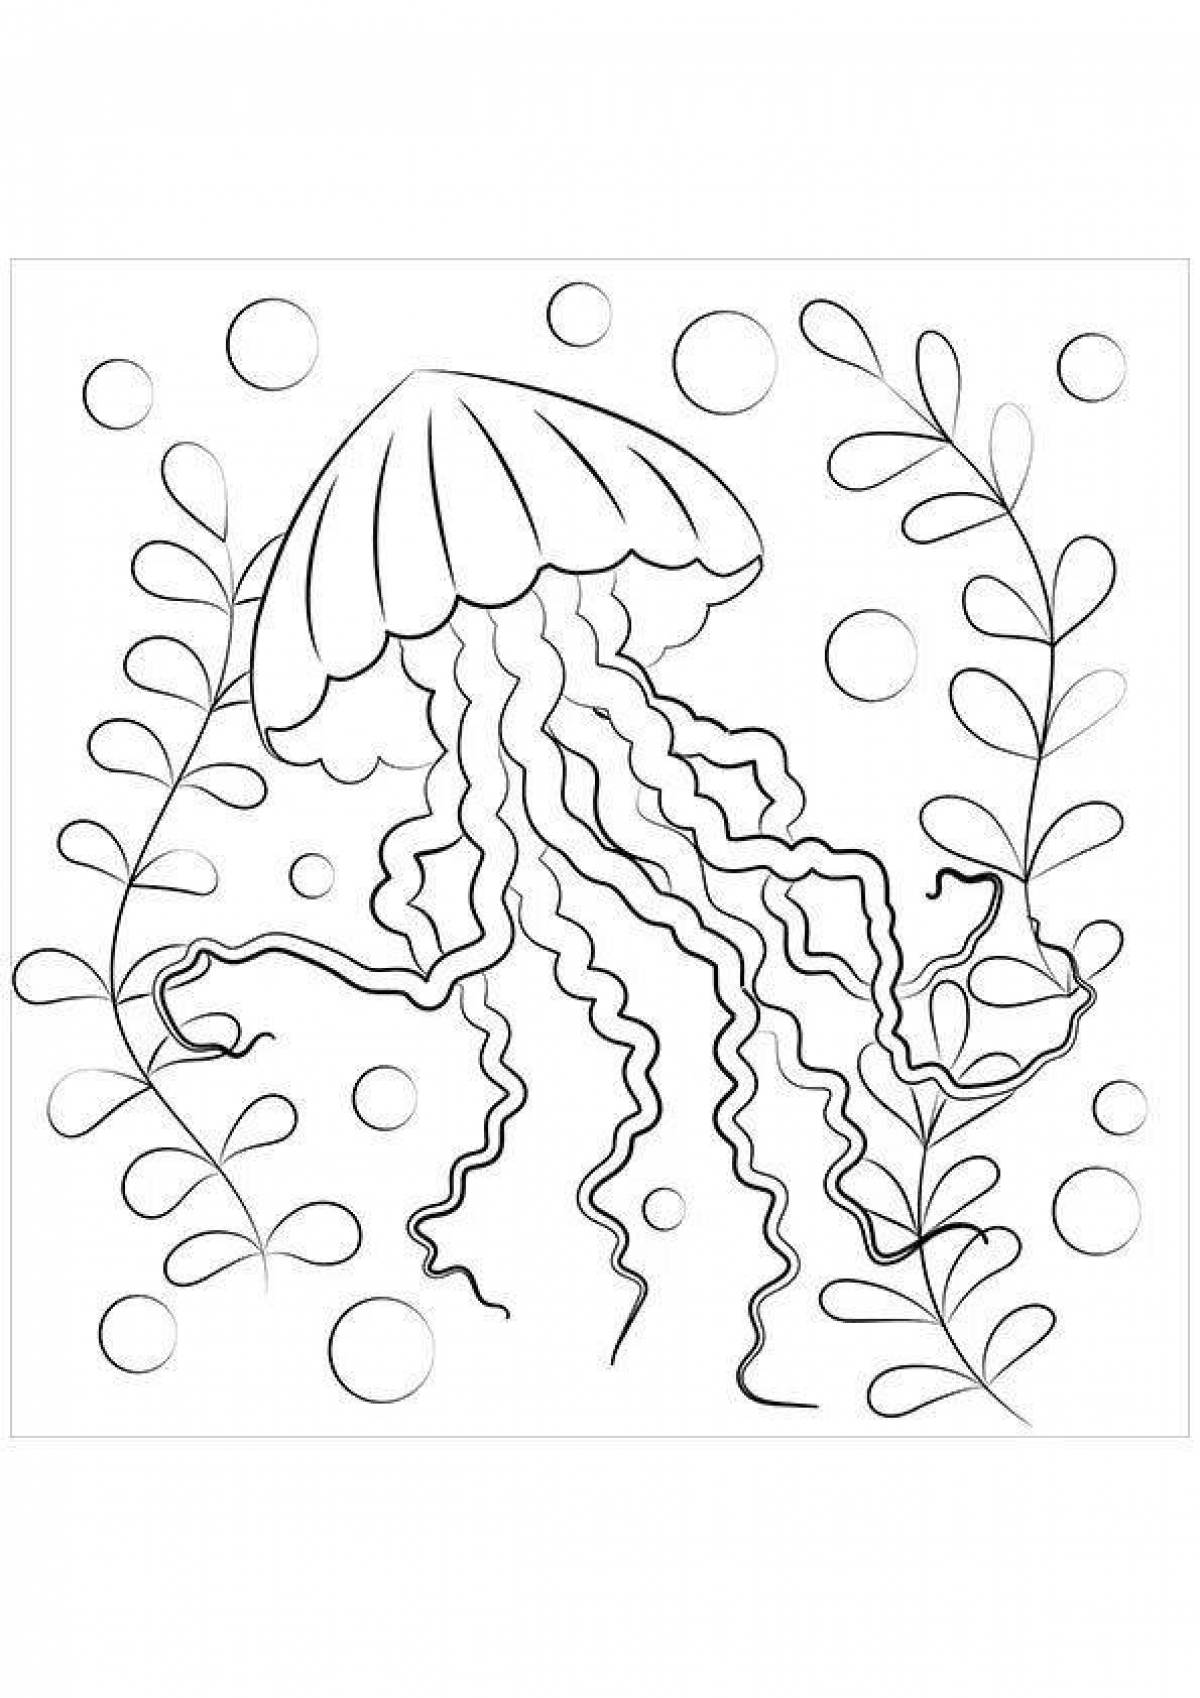 Jellyfish раскраска для детей